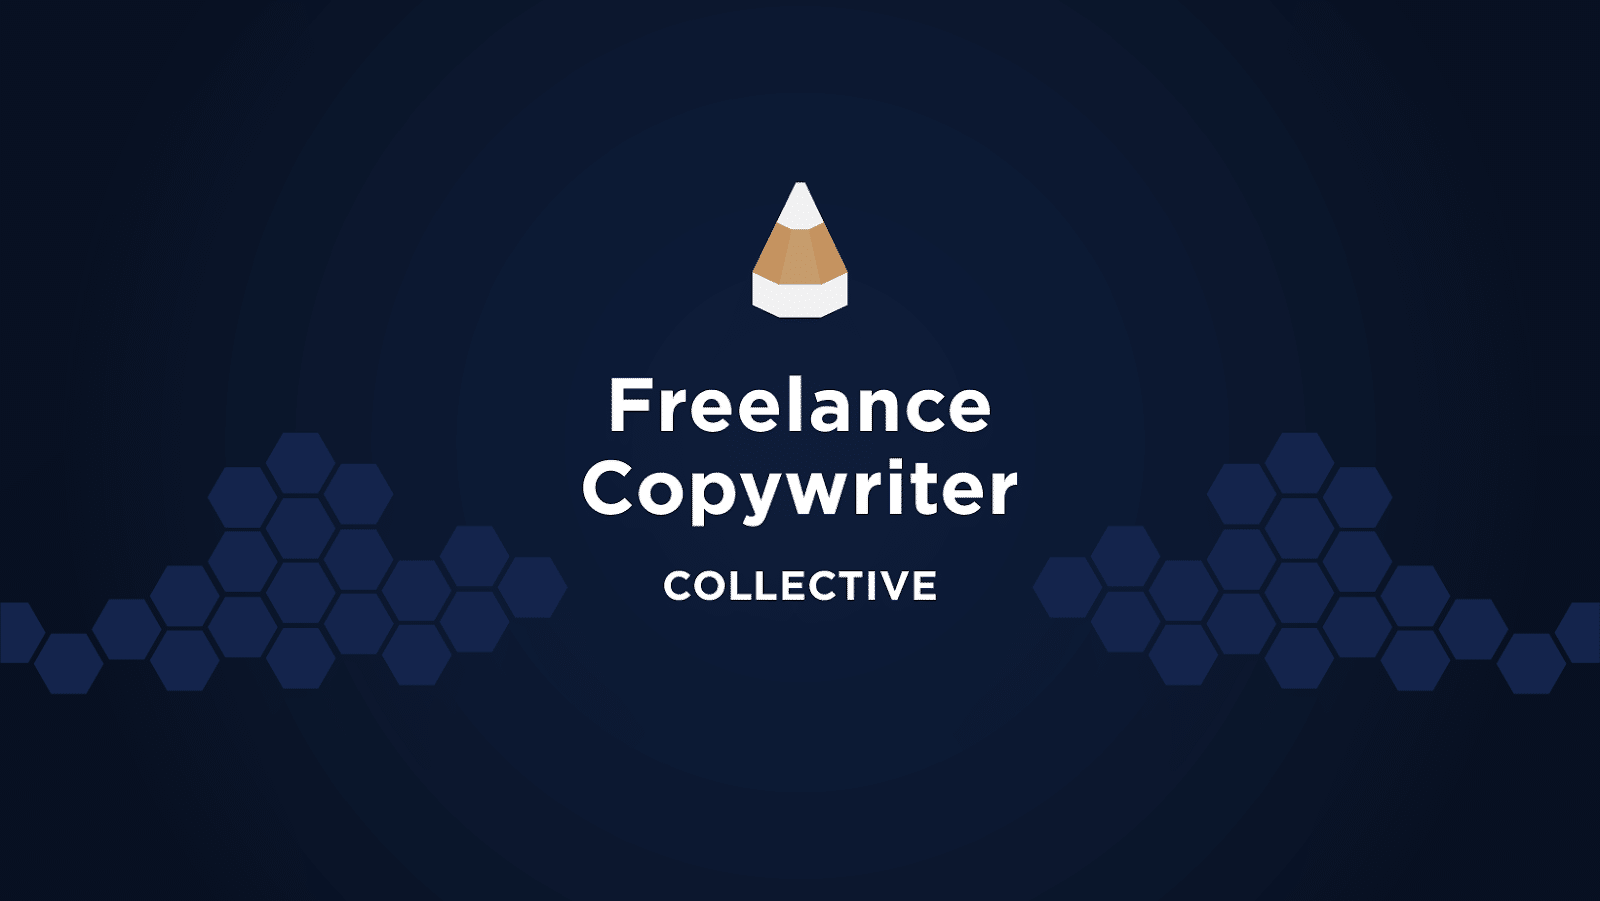 Freelance Copywriter Collective